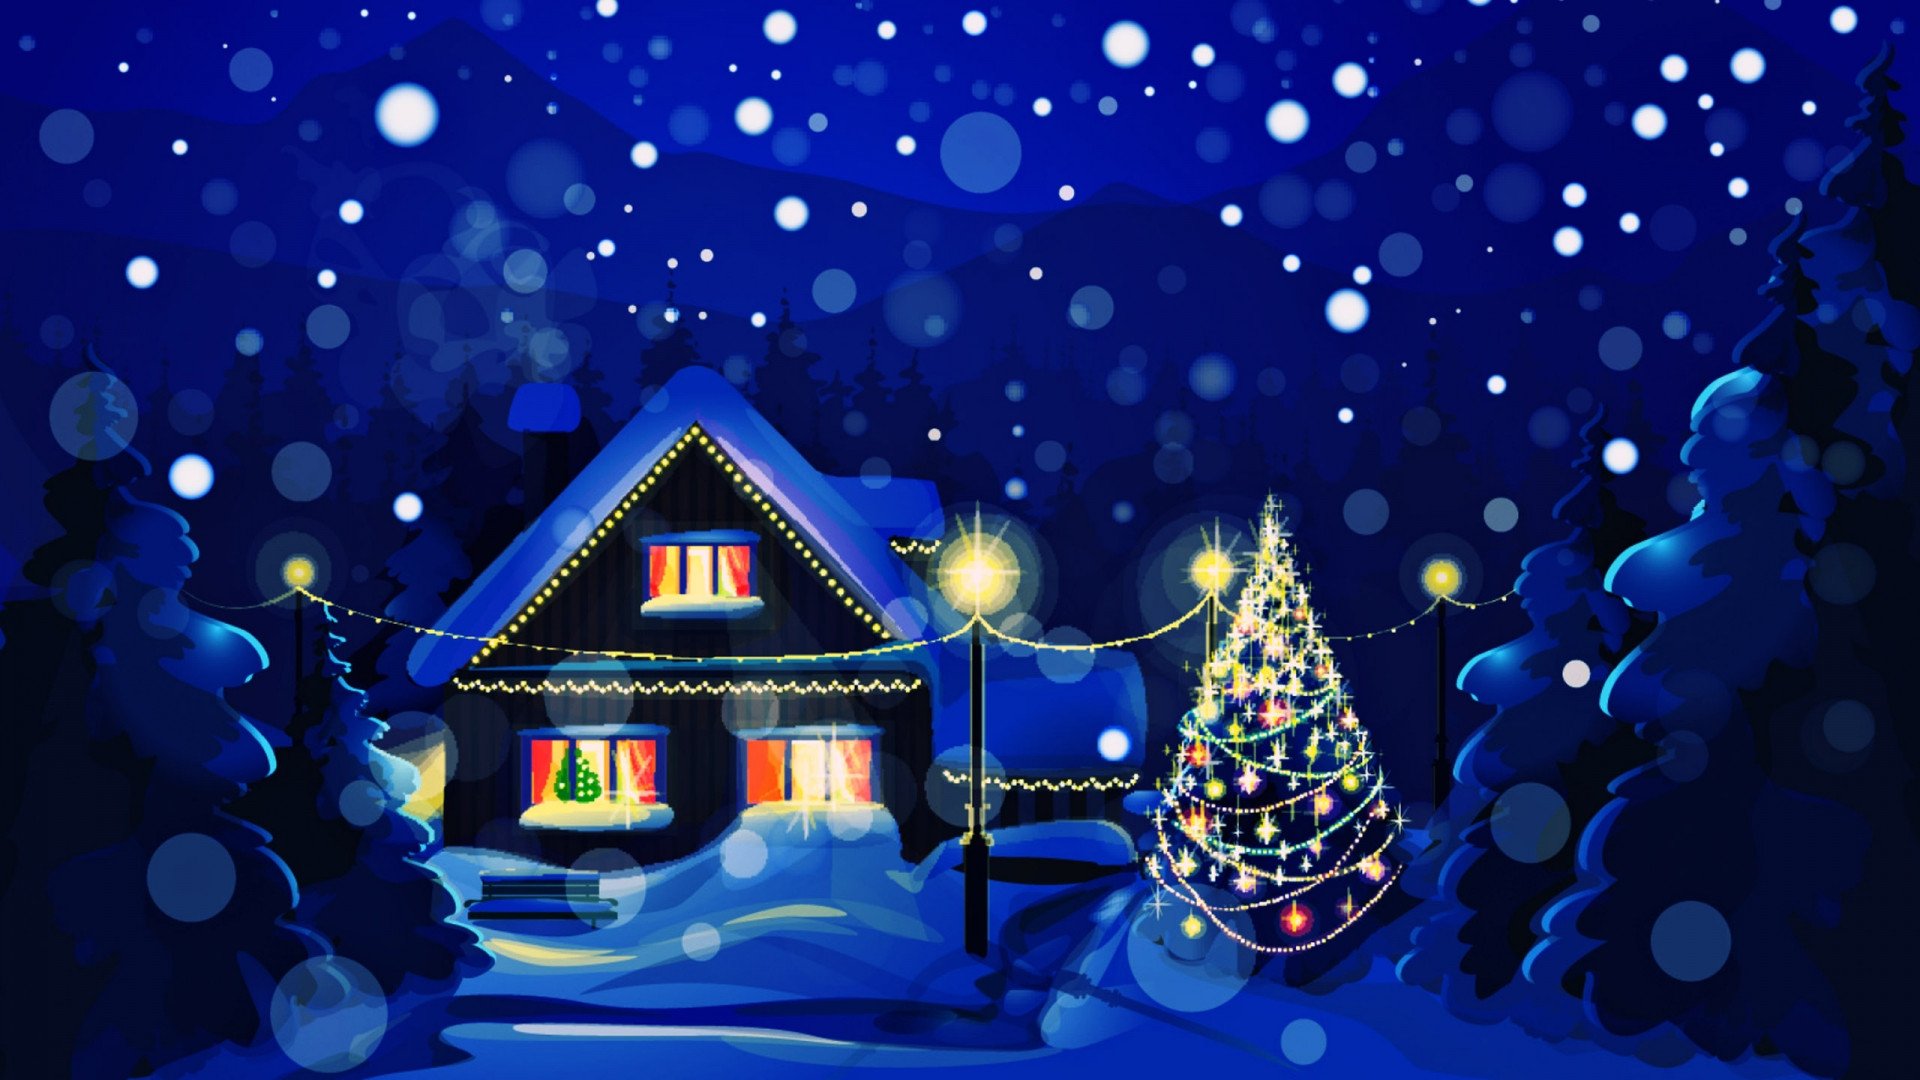 Free Christmas Desktop Wallpaper Free Hd Christmas Wallpapers Desktop Backgrounds 2016